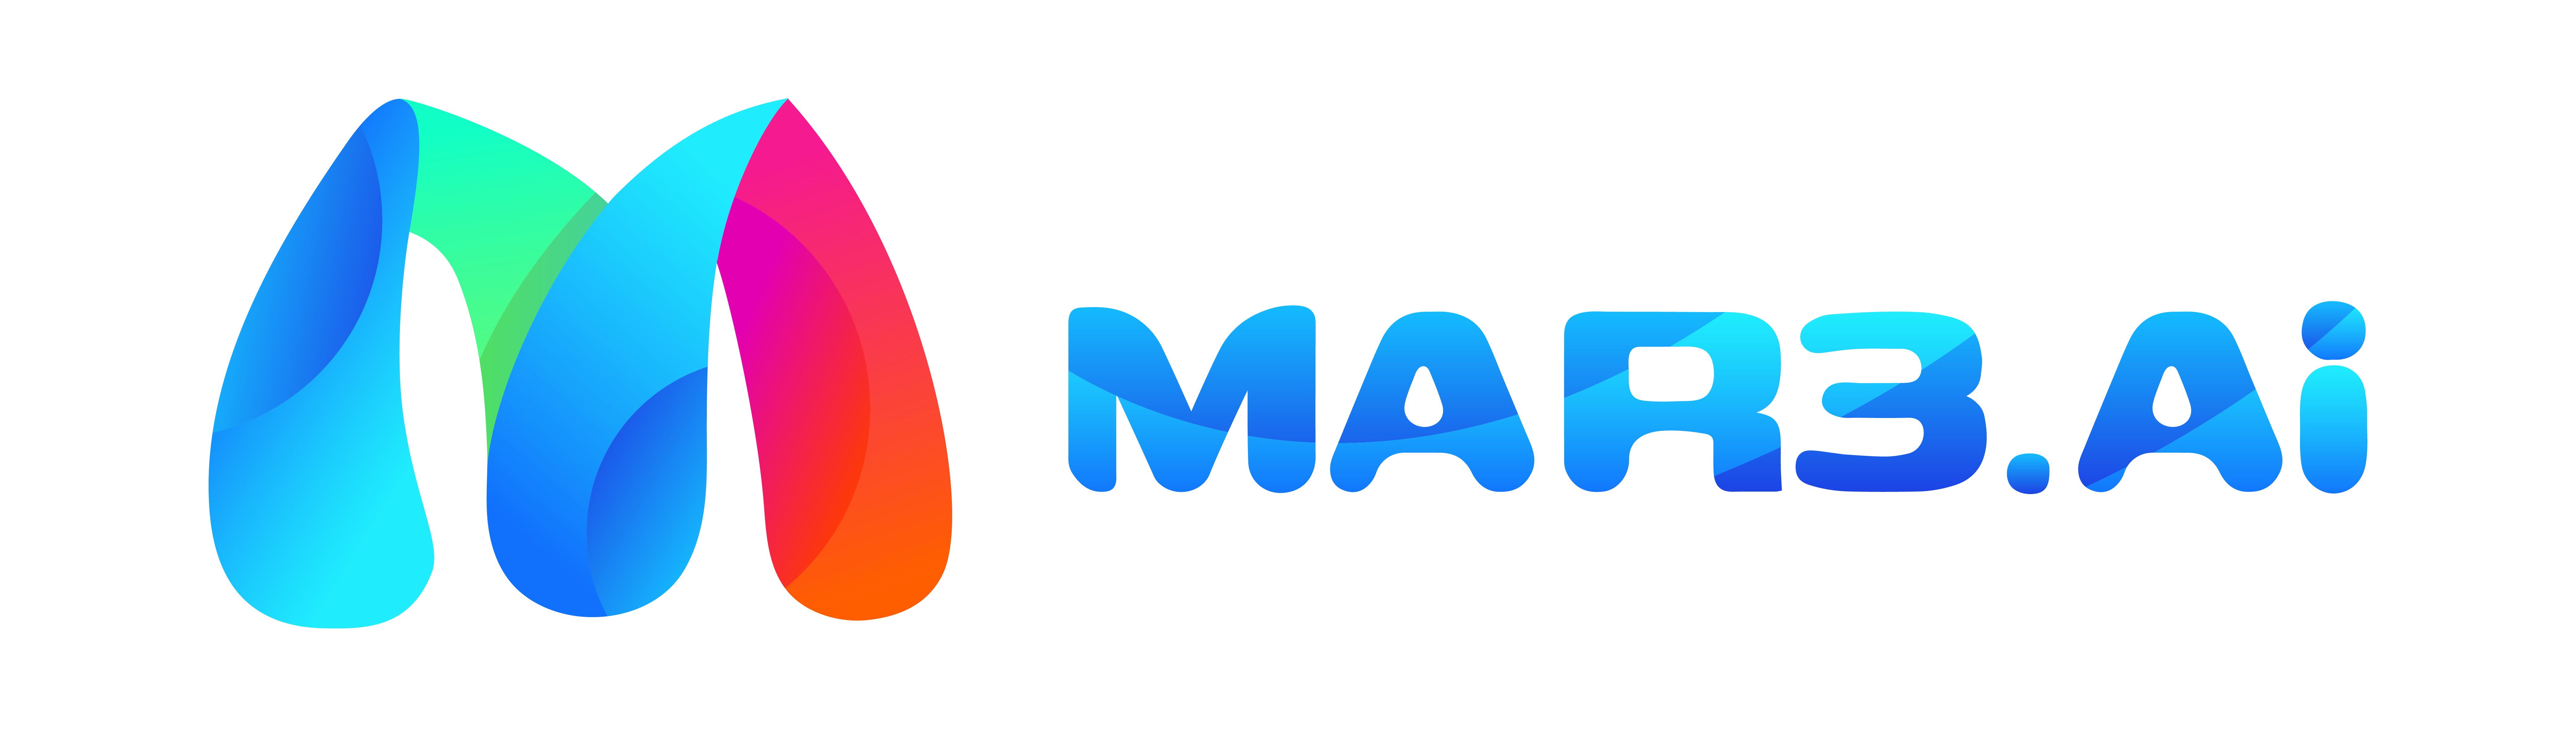 Mar3 | The 1st AI SocialFi Platform